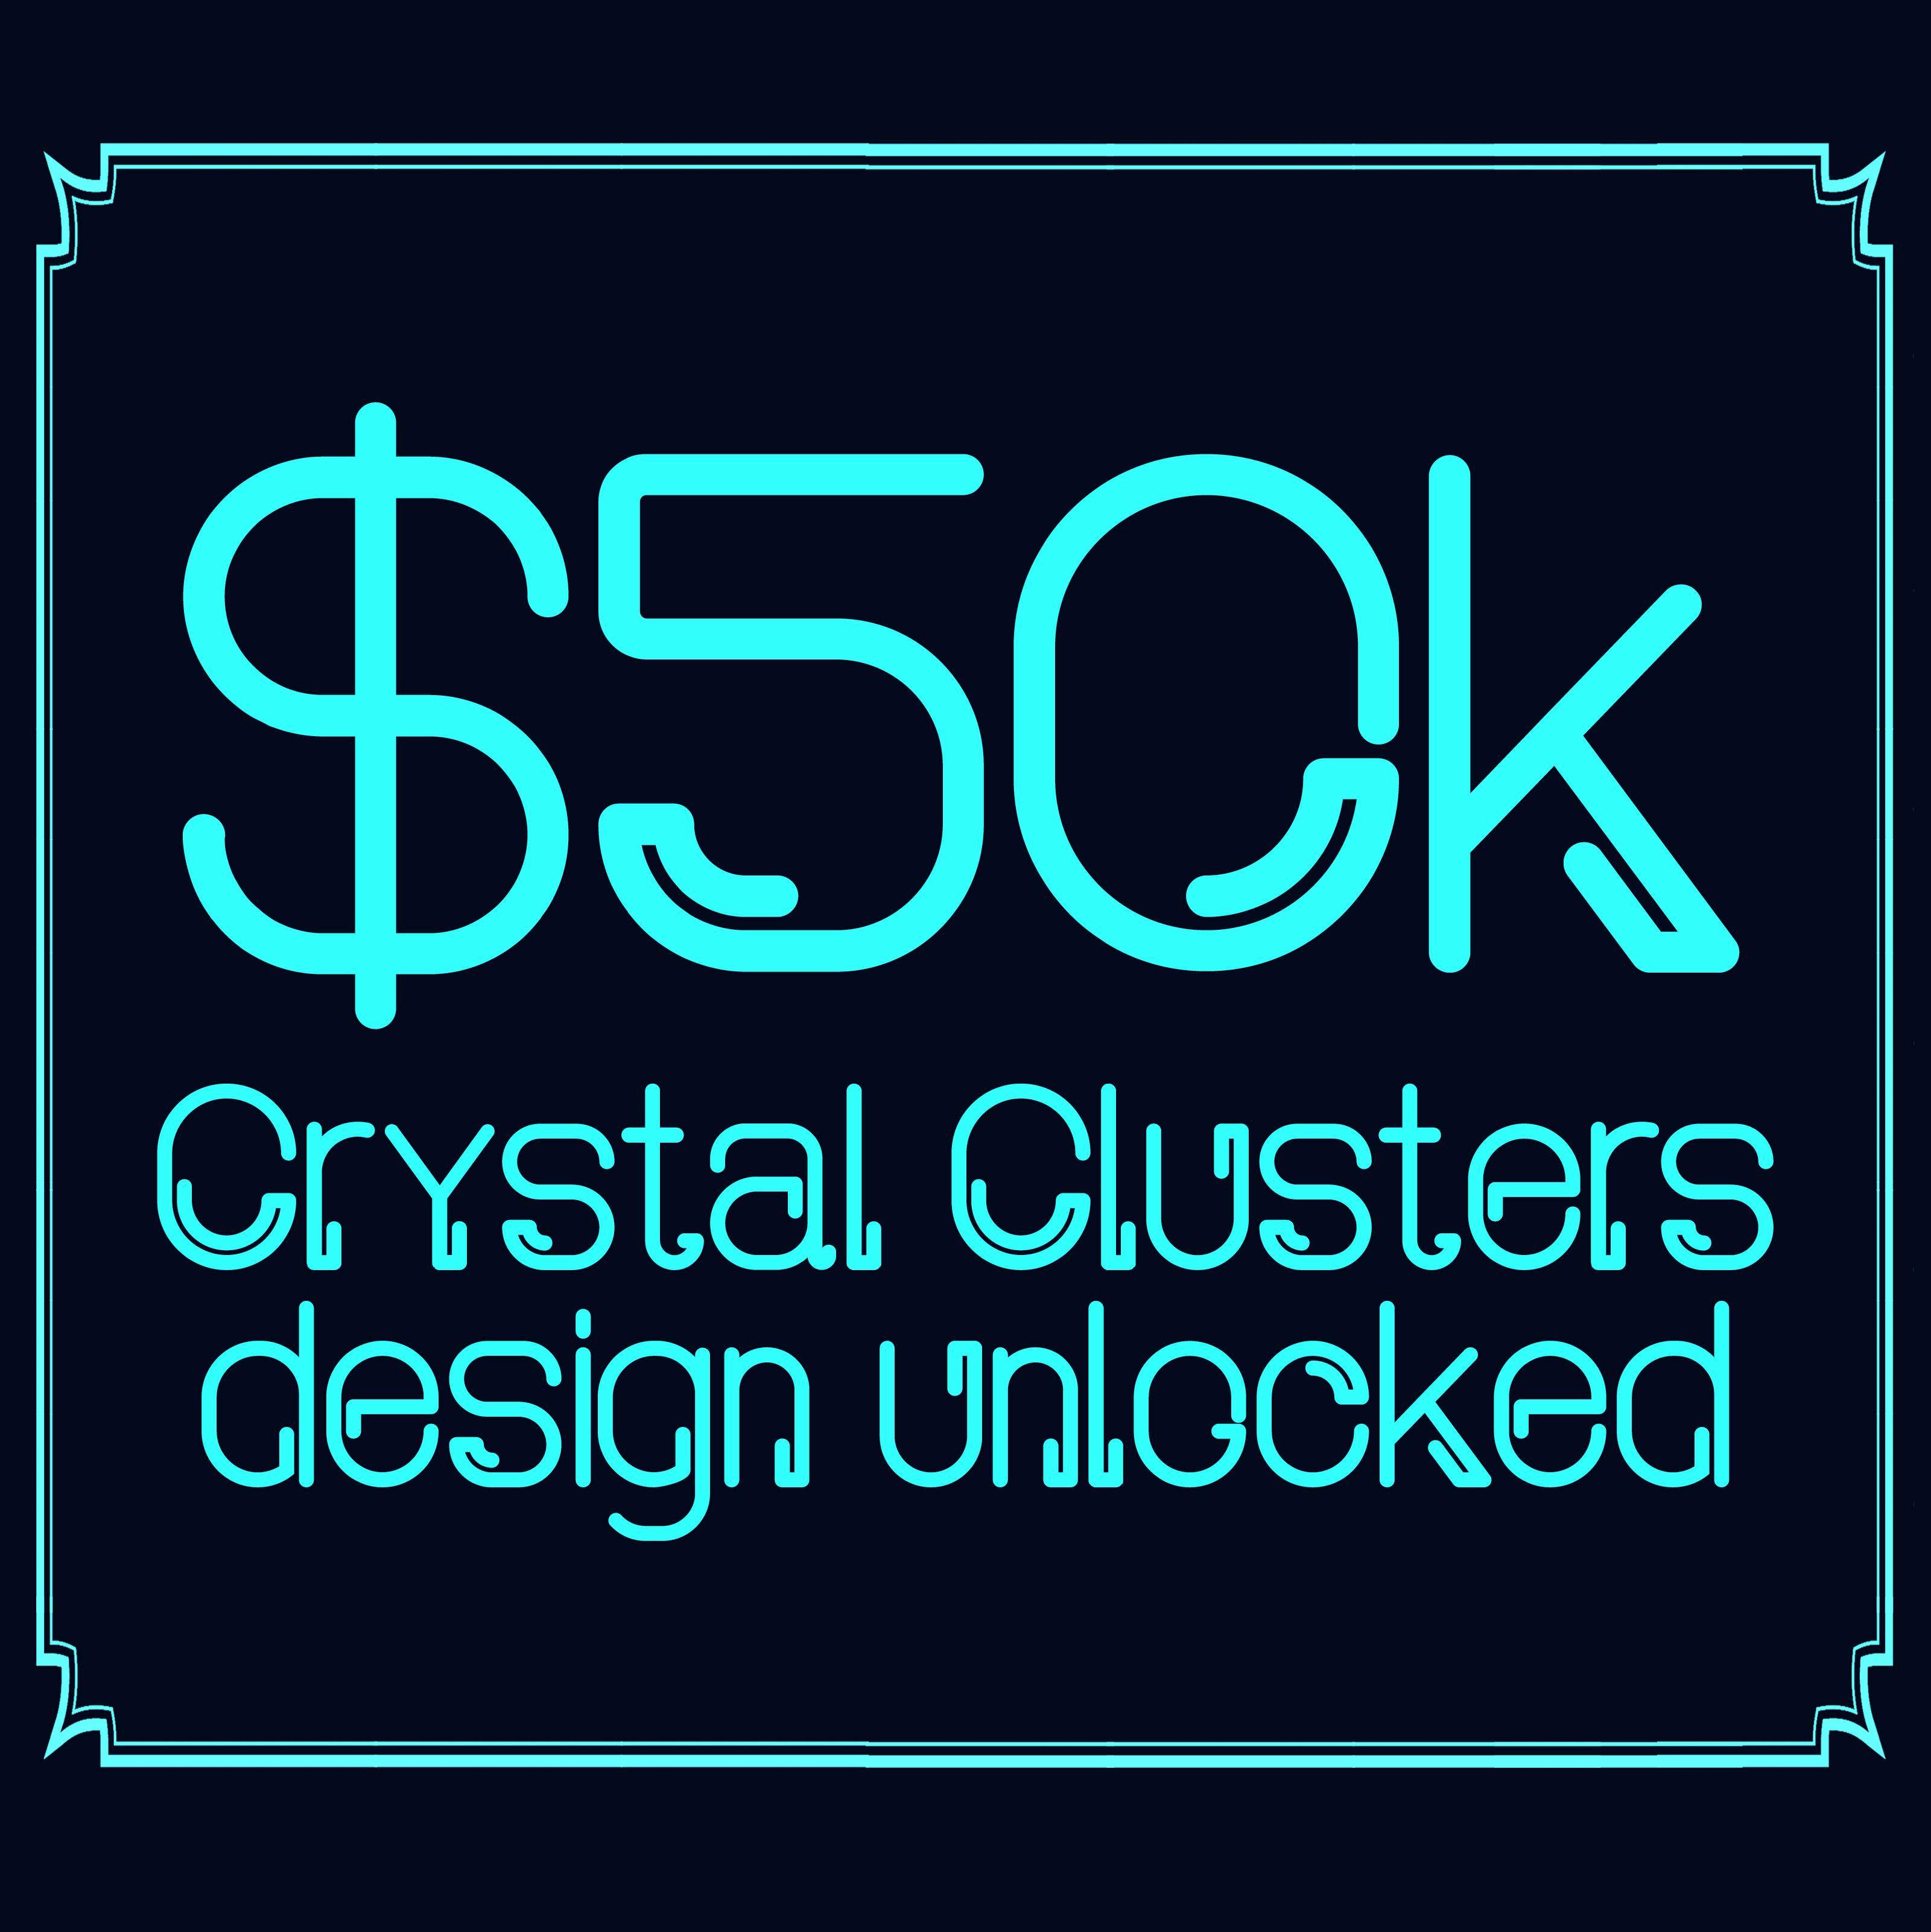 Crystal Clusters design unlocked